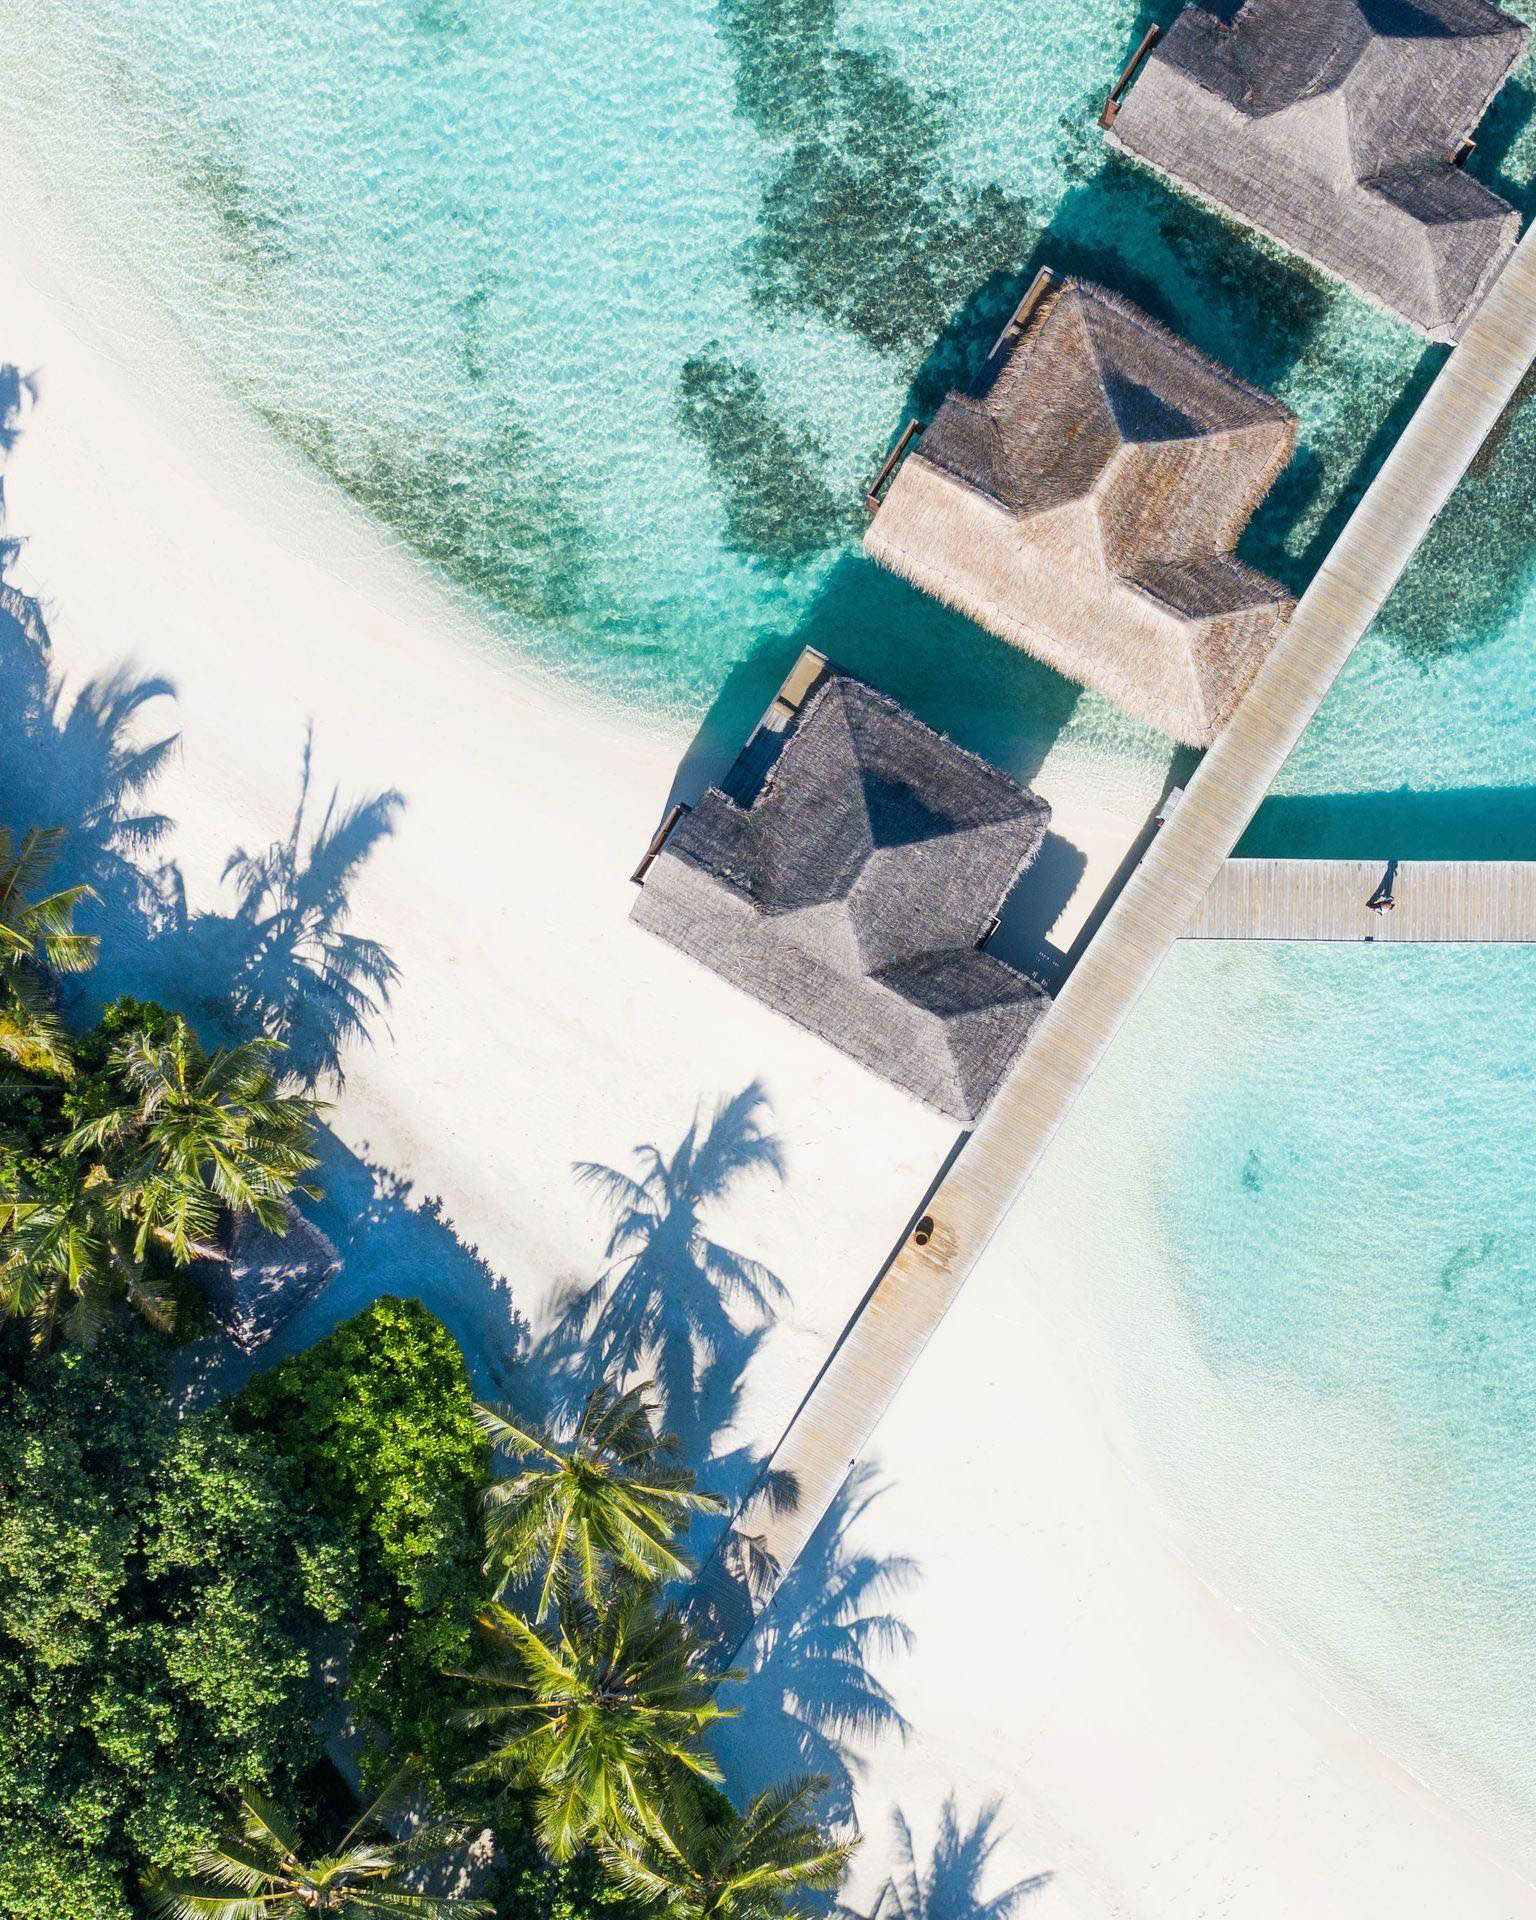 Anantara Veli Maldives Resort - South Male Atoll, Maldives - Overwater Villa Jetty Overhead Aerial